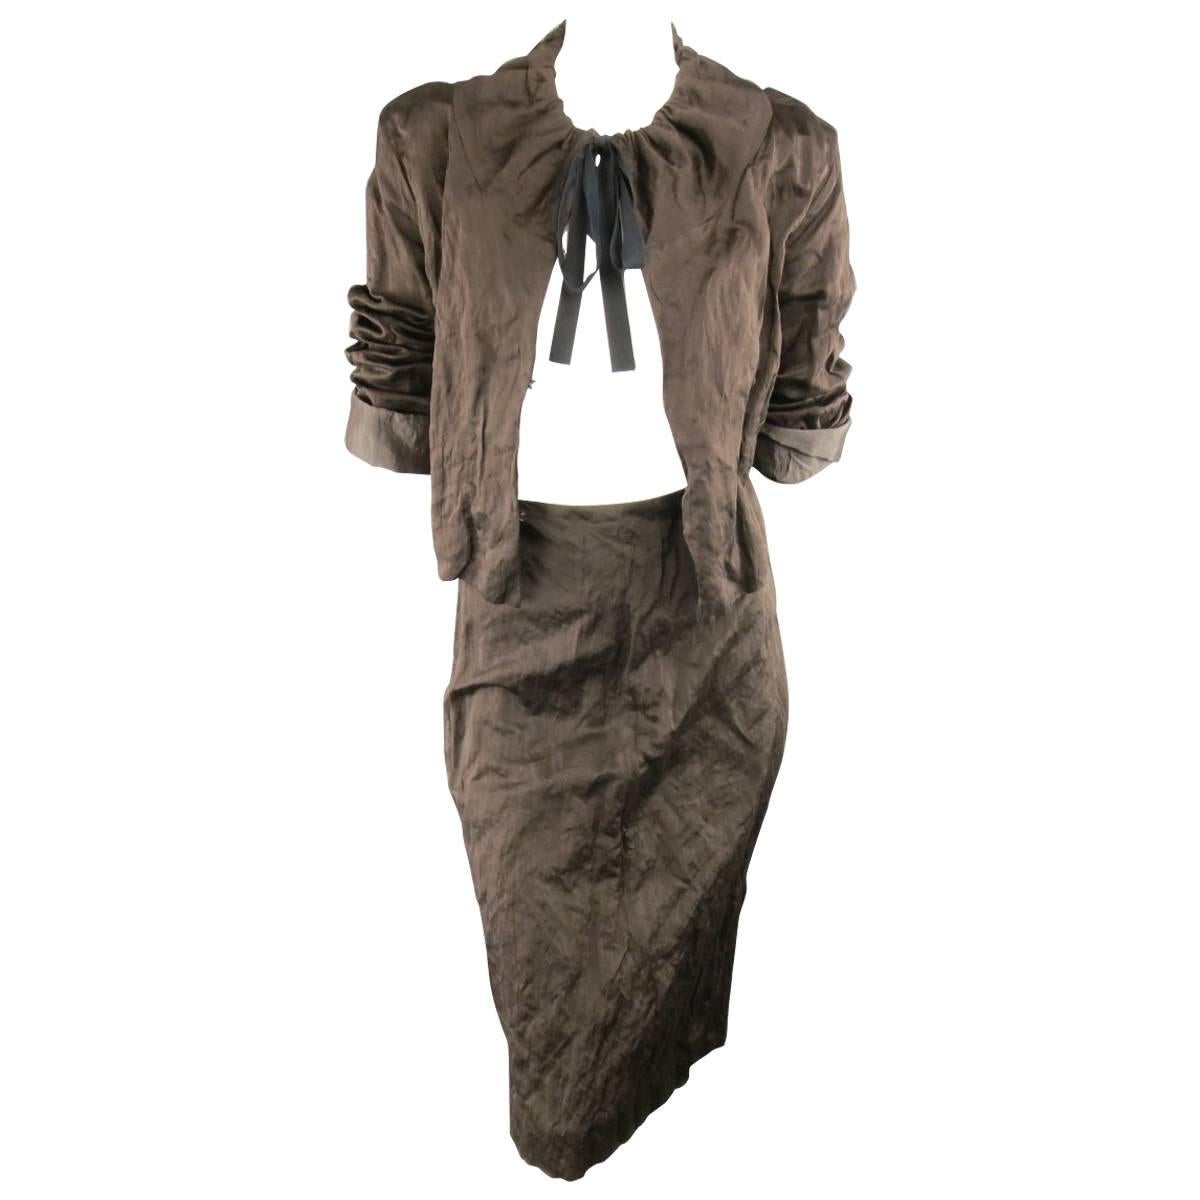 PRADA Spring 2009 8 Brown Wrinkled Cotton / Silk Blend Drawstring Skirt Suit